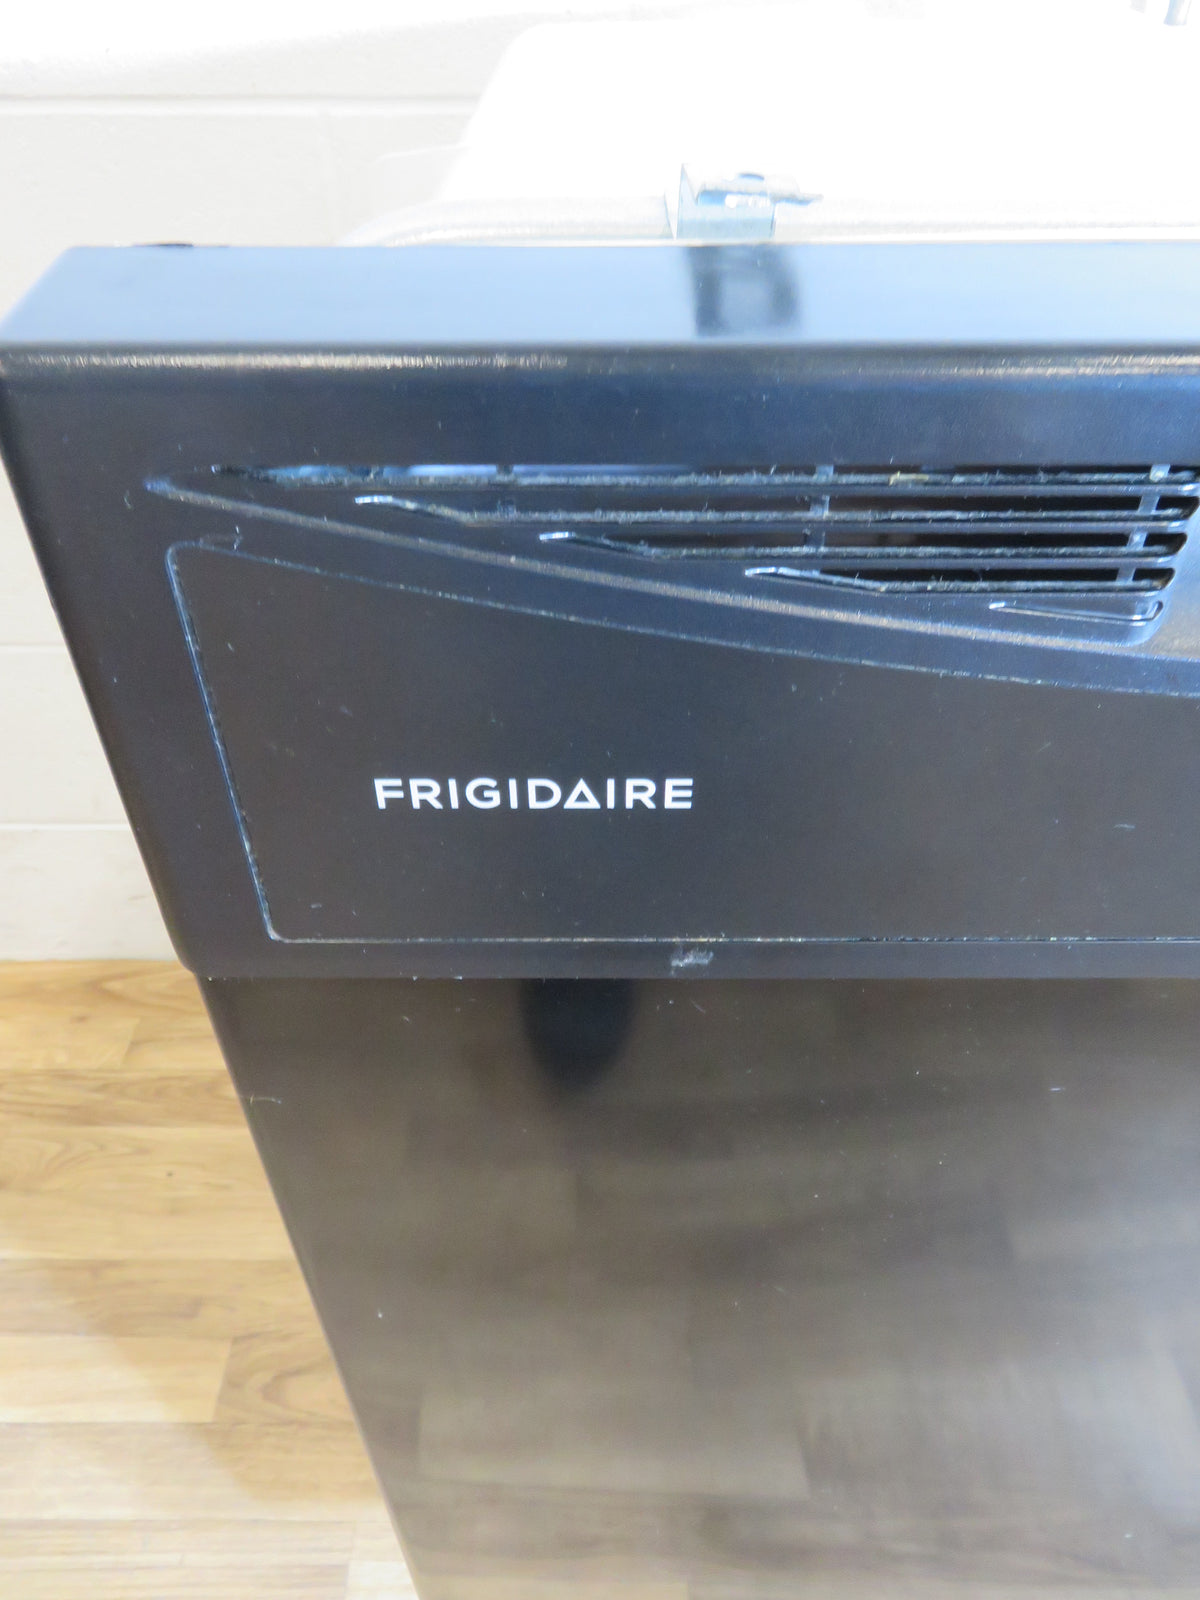 Frigidaire Dishwasher in Black